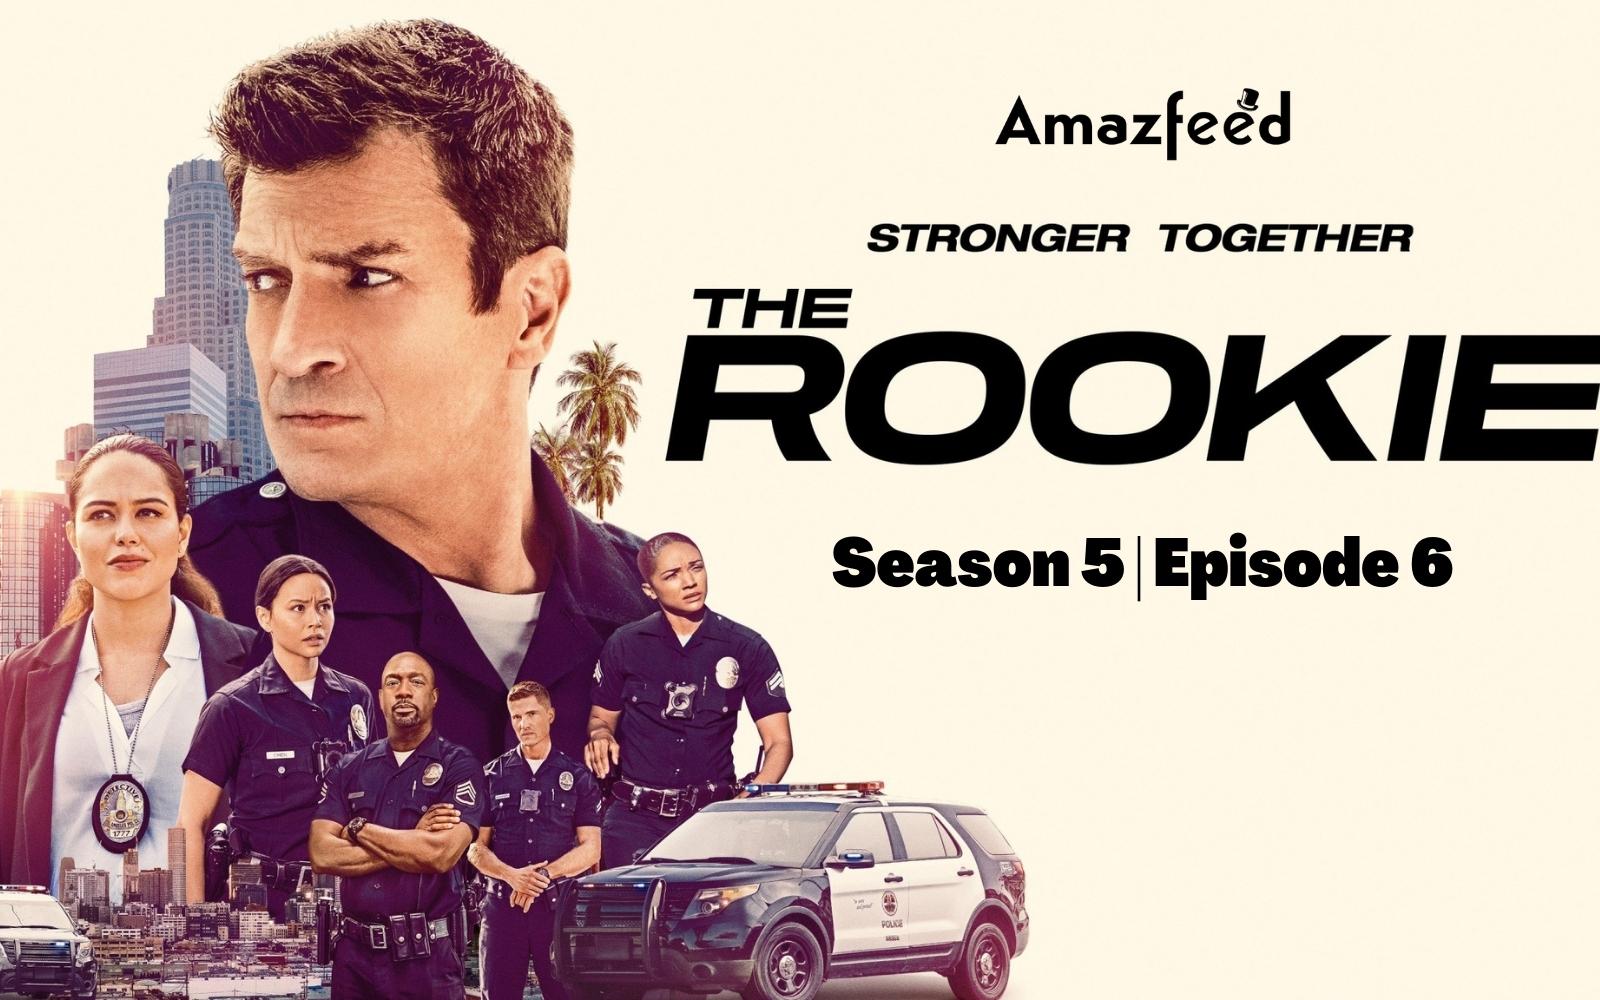 The Rookie Season 5 Episode 6 ⇒ Spoilers, Countdown, Speculation, Recap, Cast & News Updates